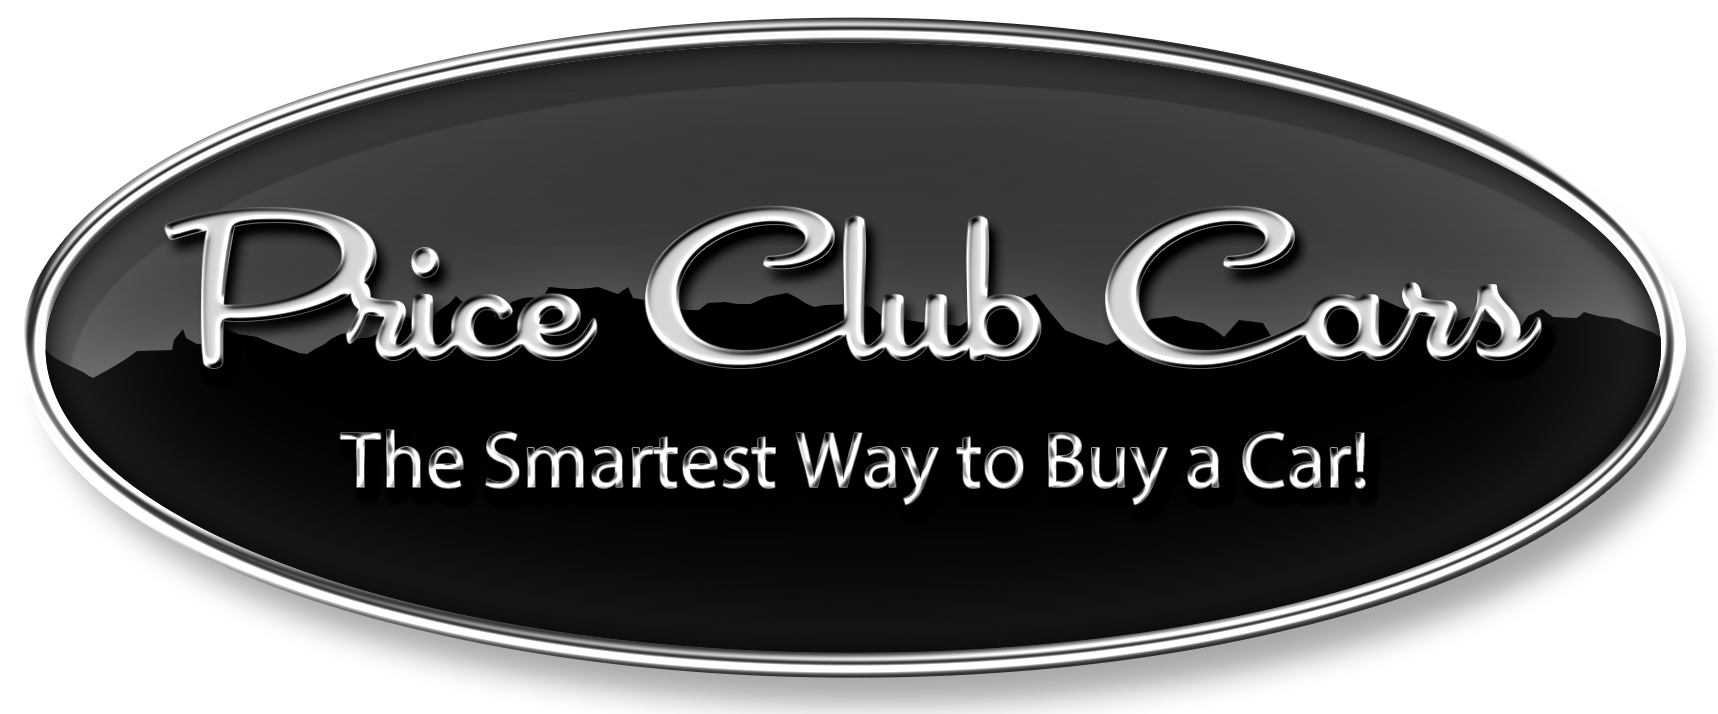 Price Club Cars